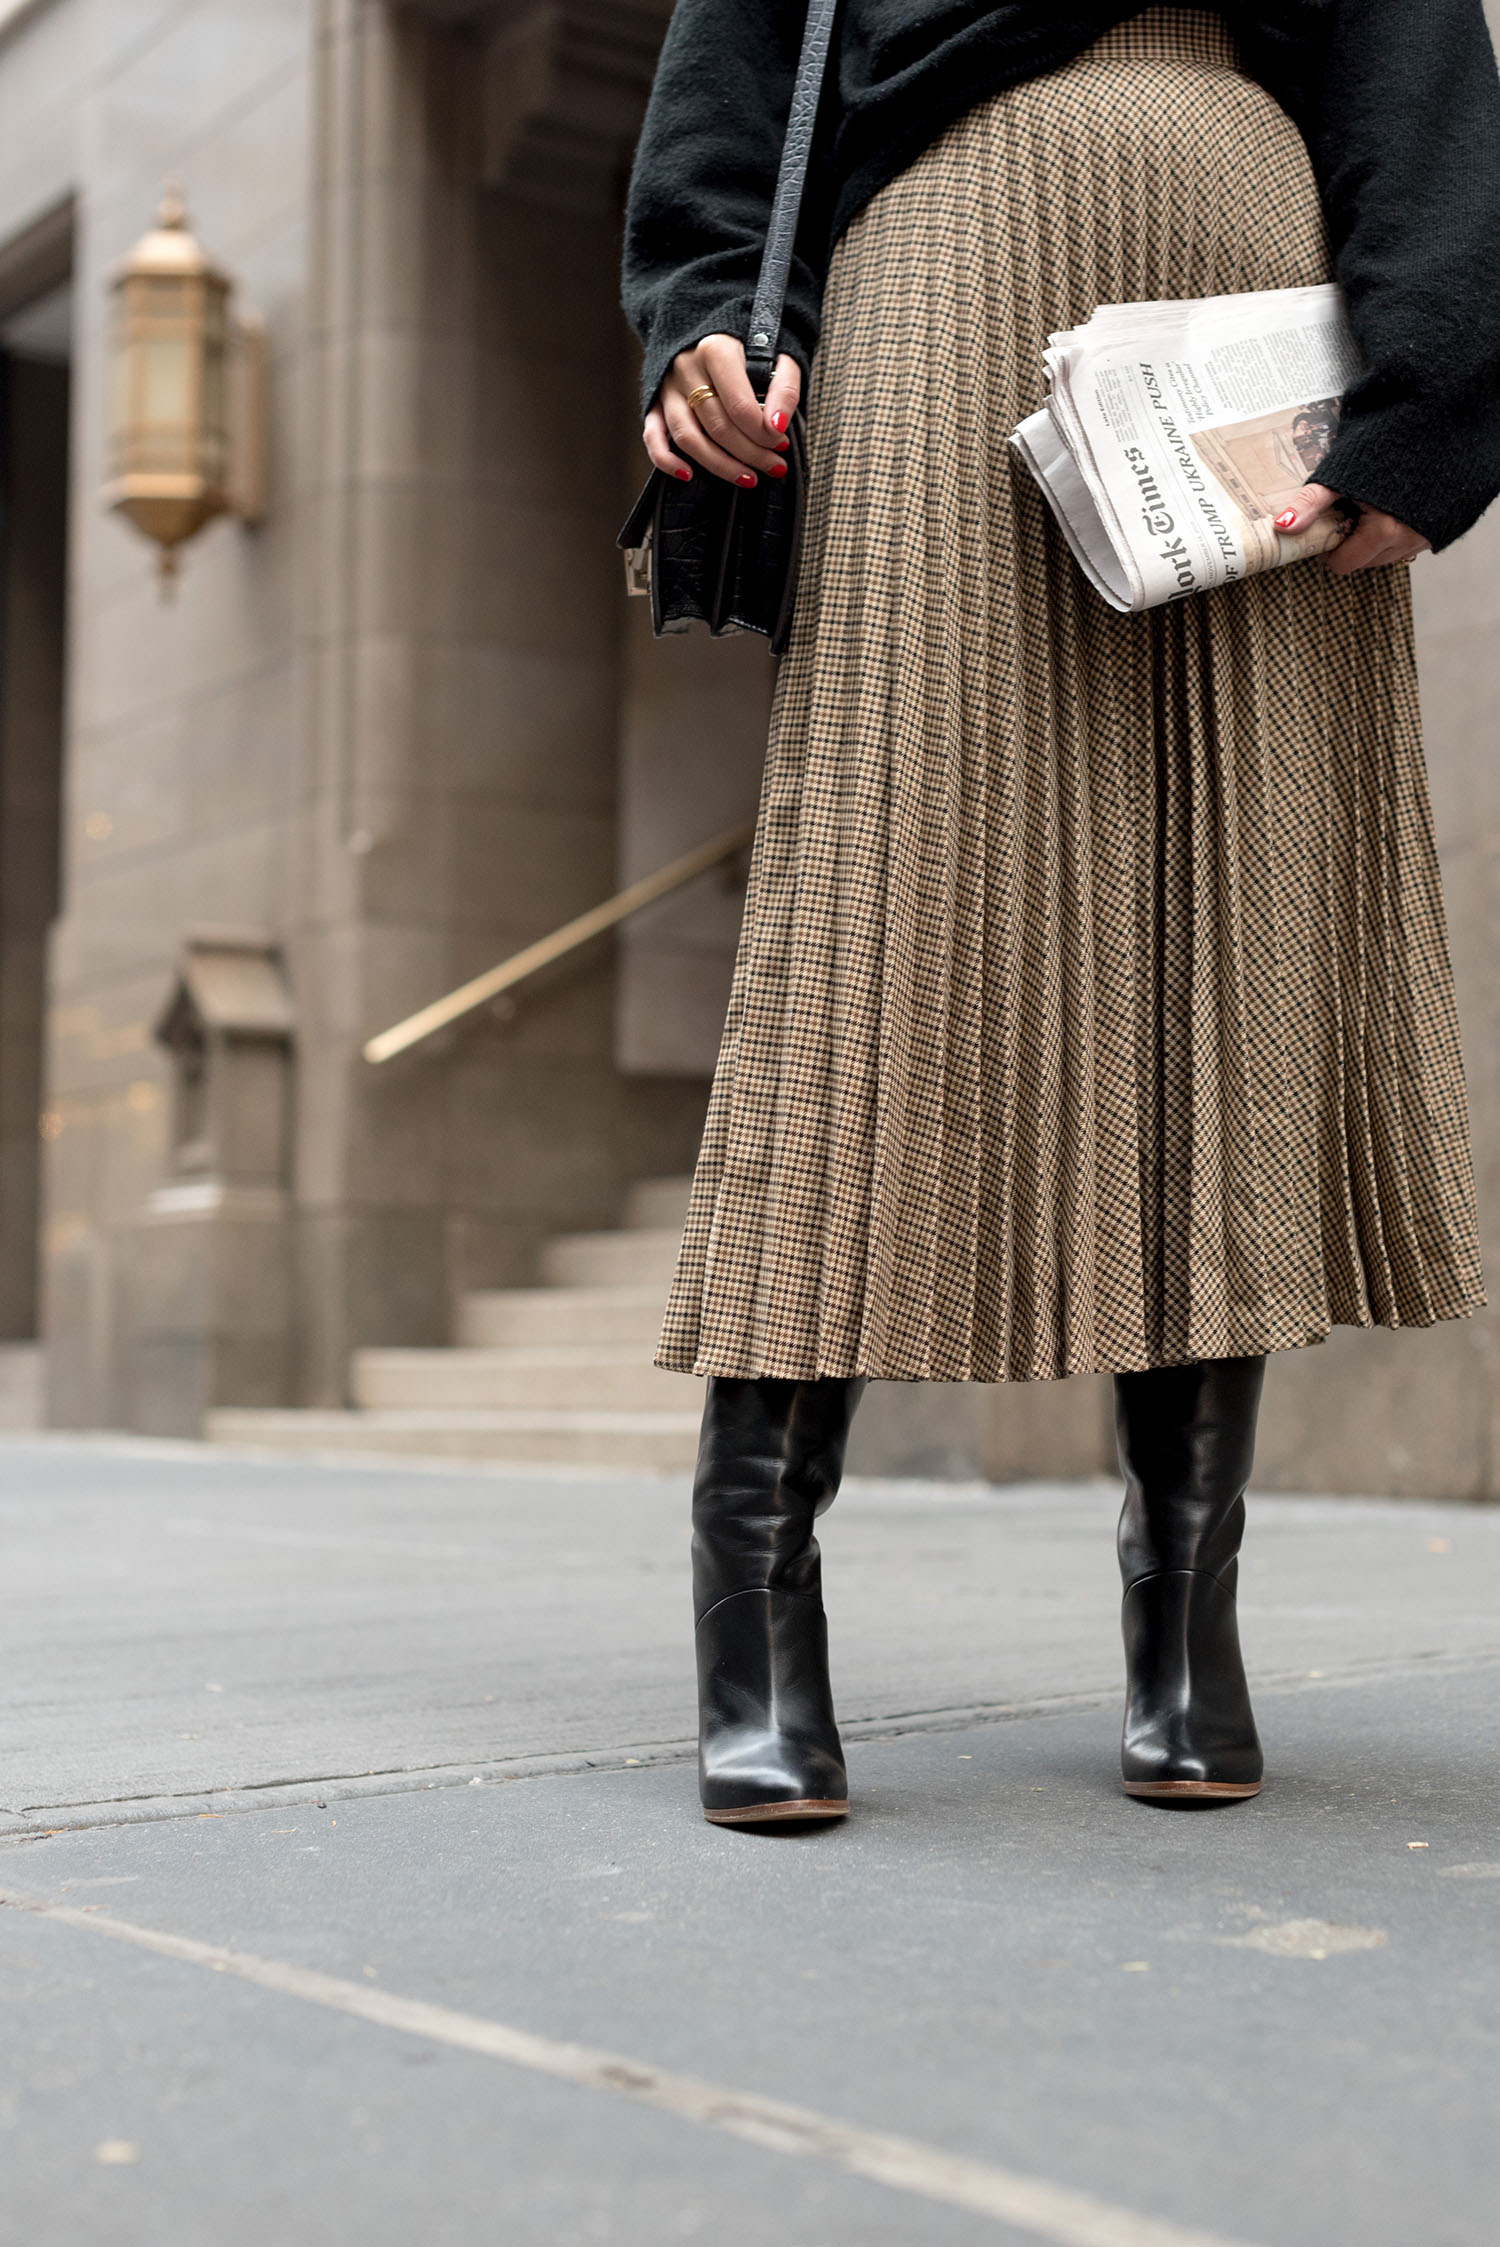 Coco & Vera - Massimo Dutti handbag, Zara pleated skirt, Sezane boots